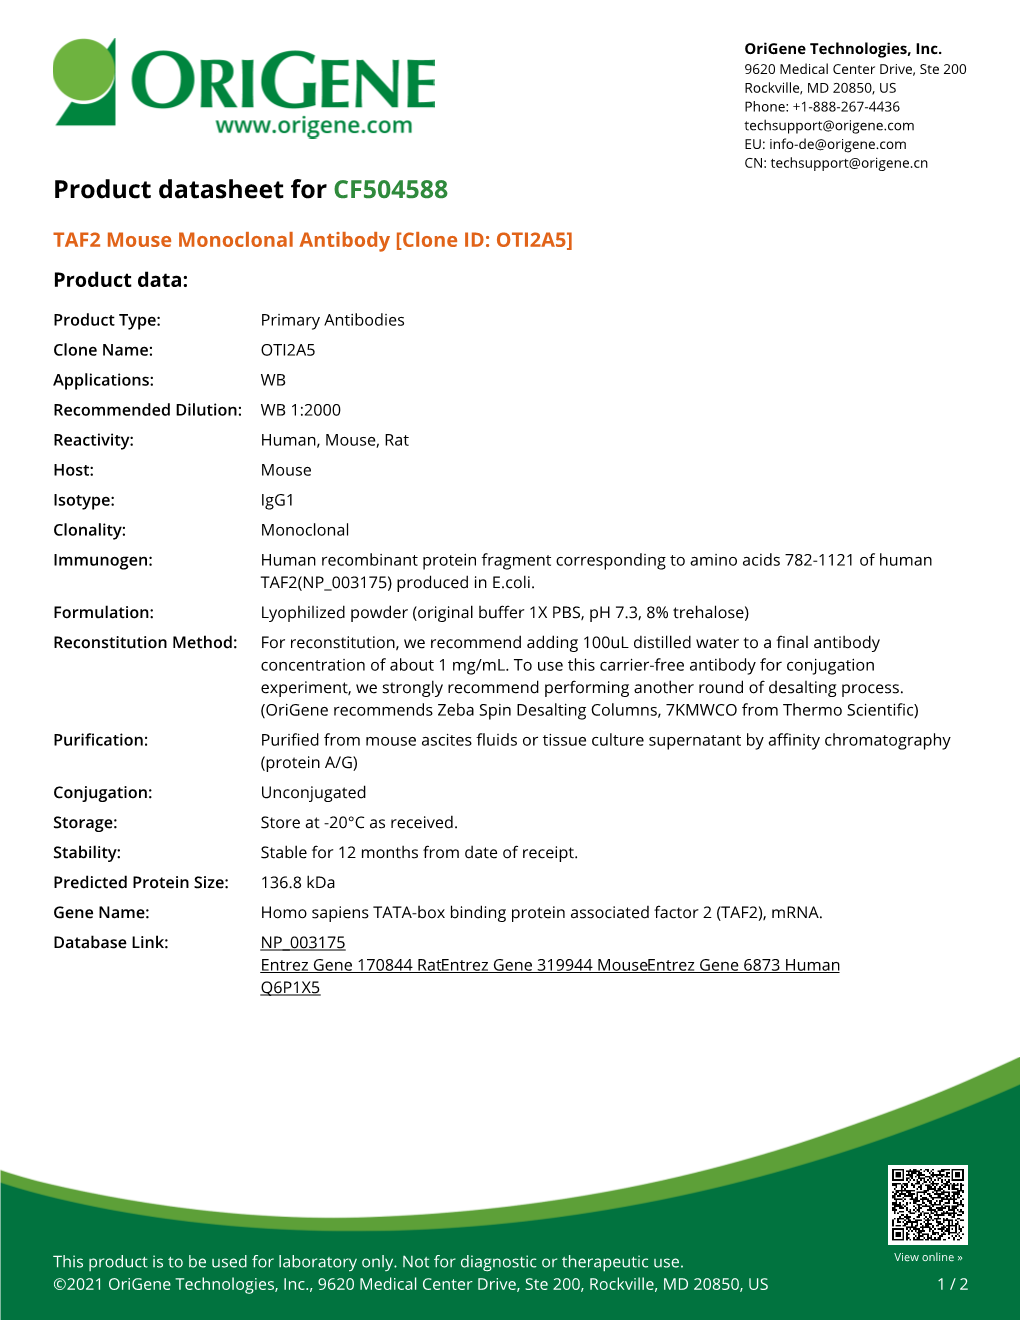 TAF2 Mouse Monoclonal Antibody [Clone ID: OTI2A5] Product Data